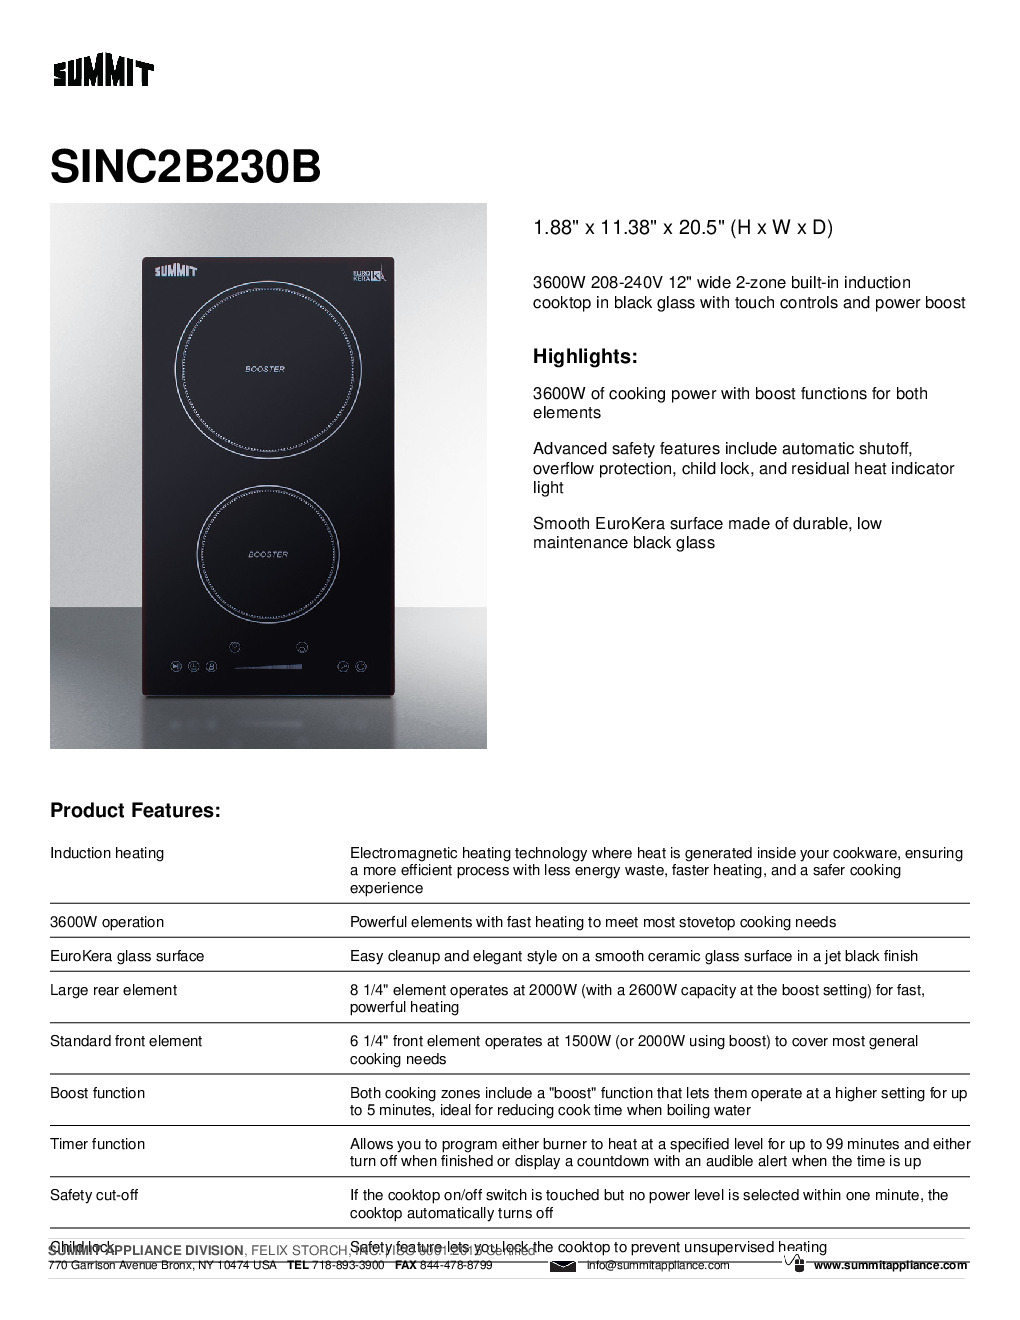 Summit SINC2B230B Built-In / Drop-In Induction Range